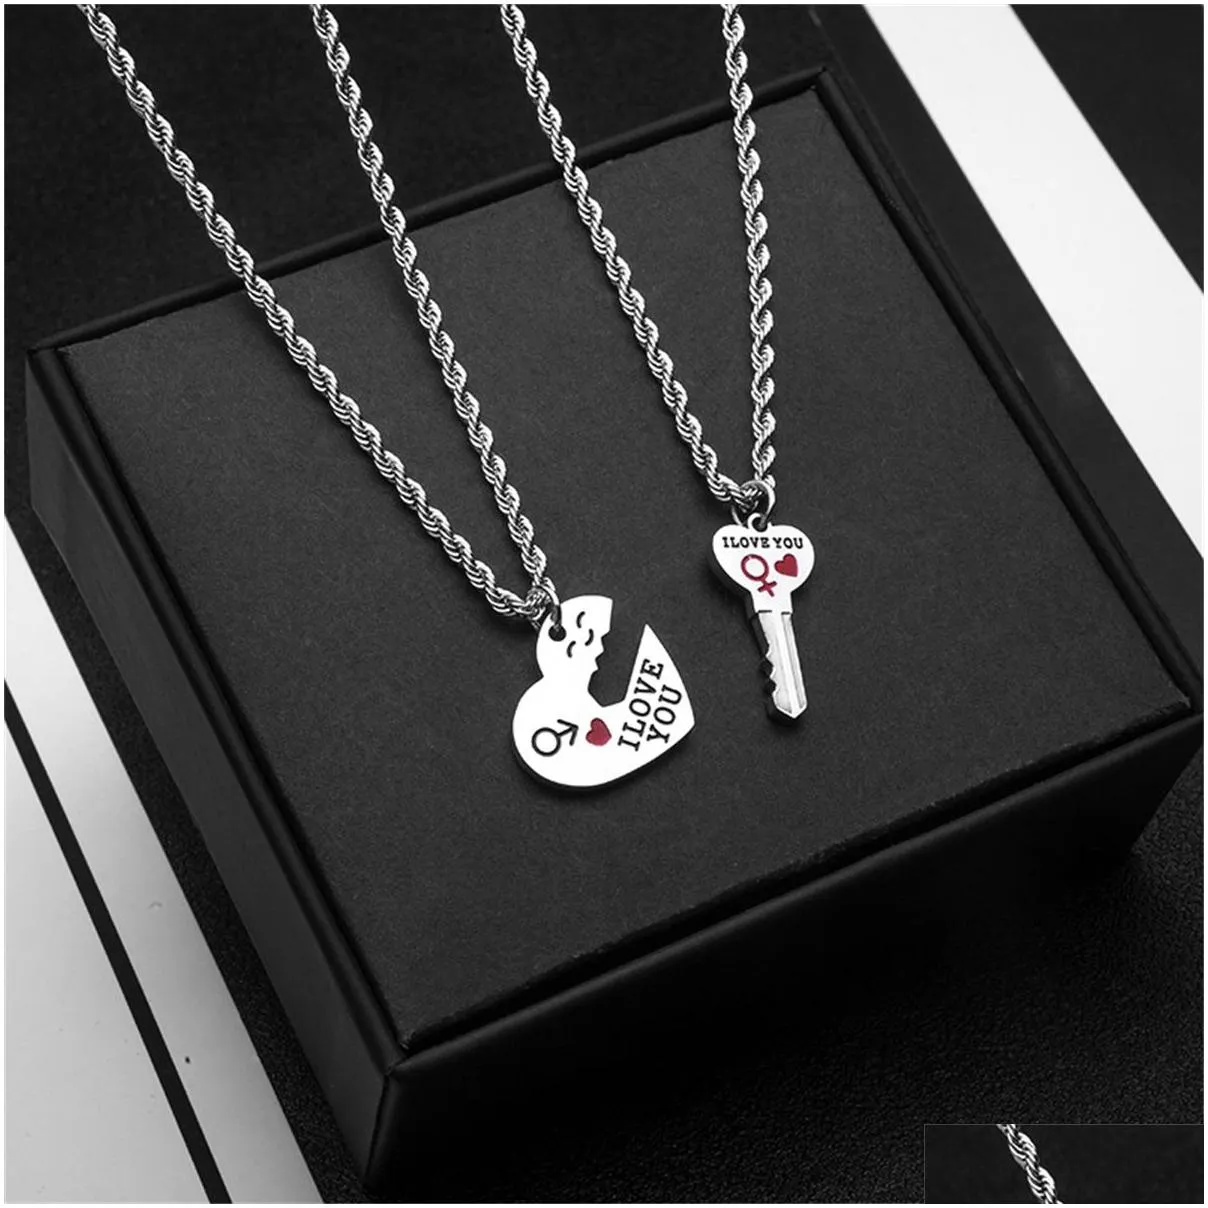 Hot Fashion Love Key Pendant Necklace Creative Couple Necklace Jewelry For Girlfriend Boyfriends